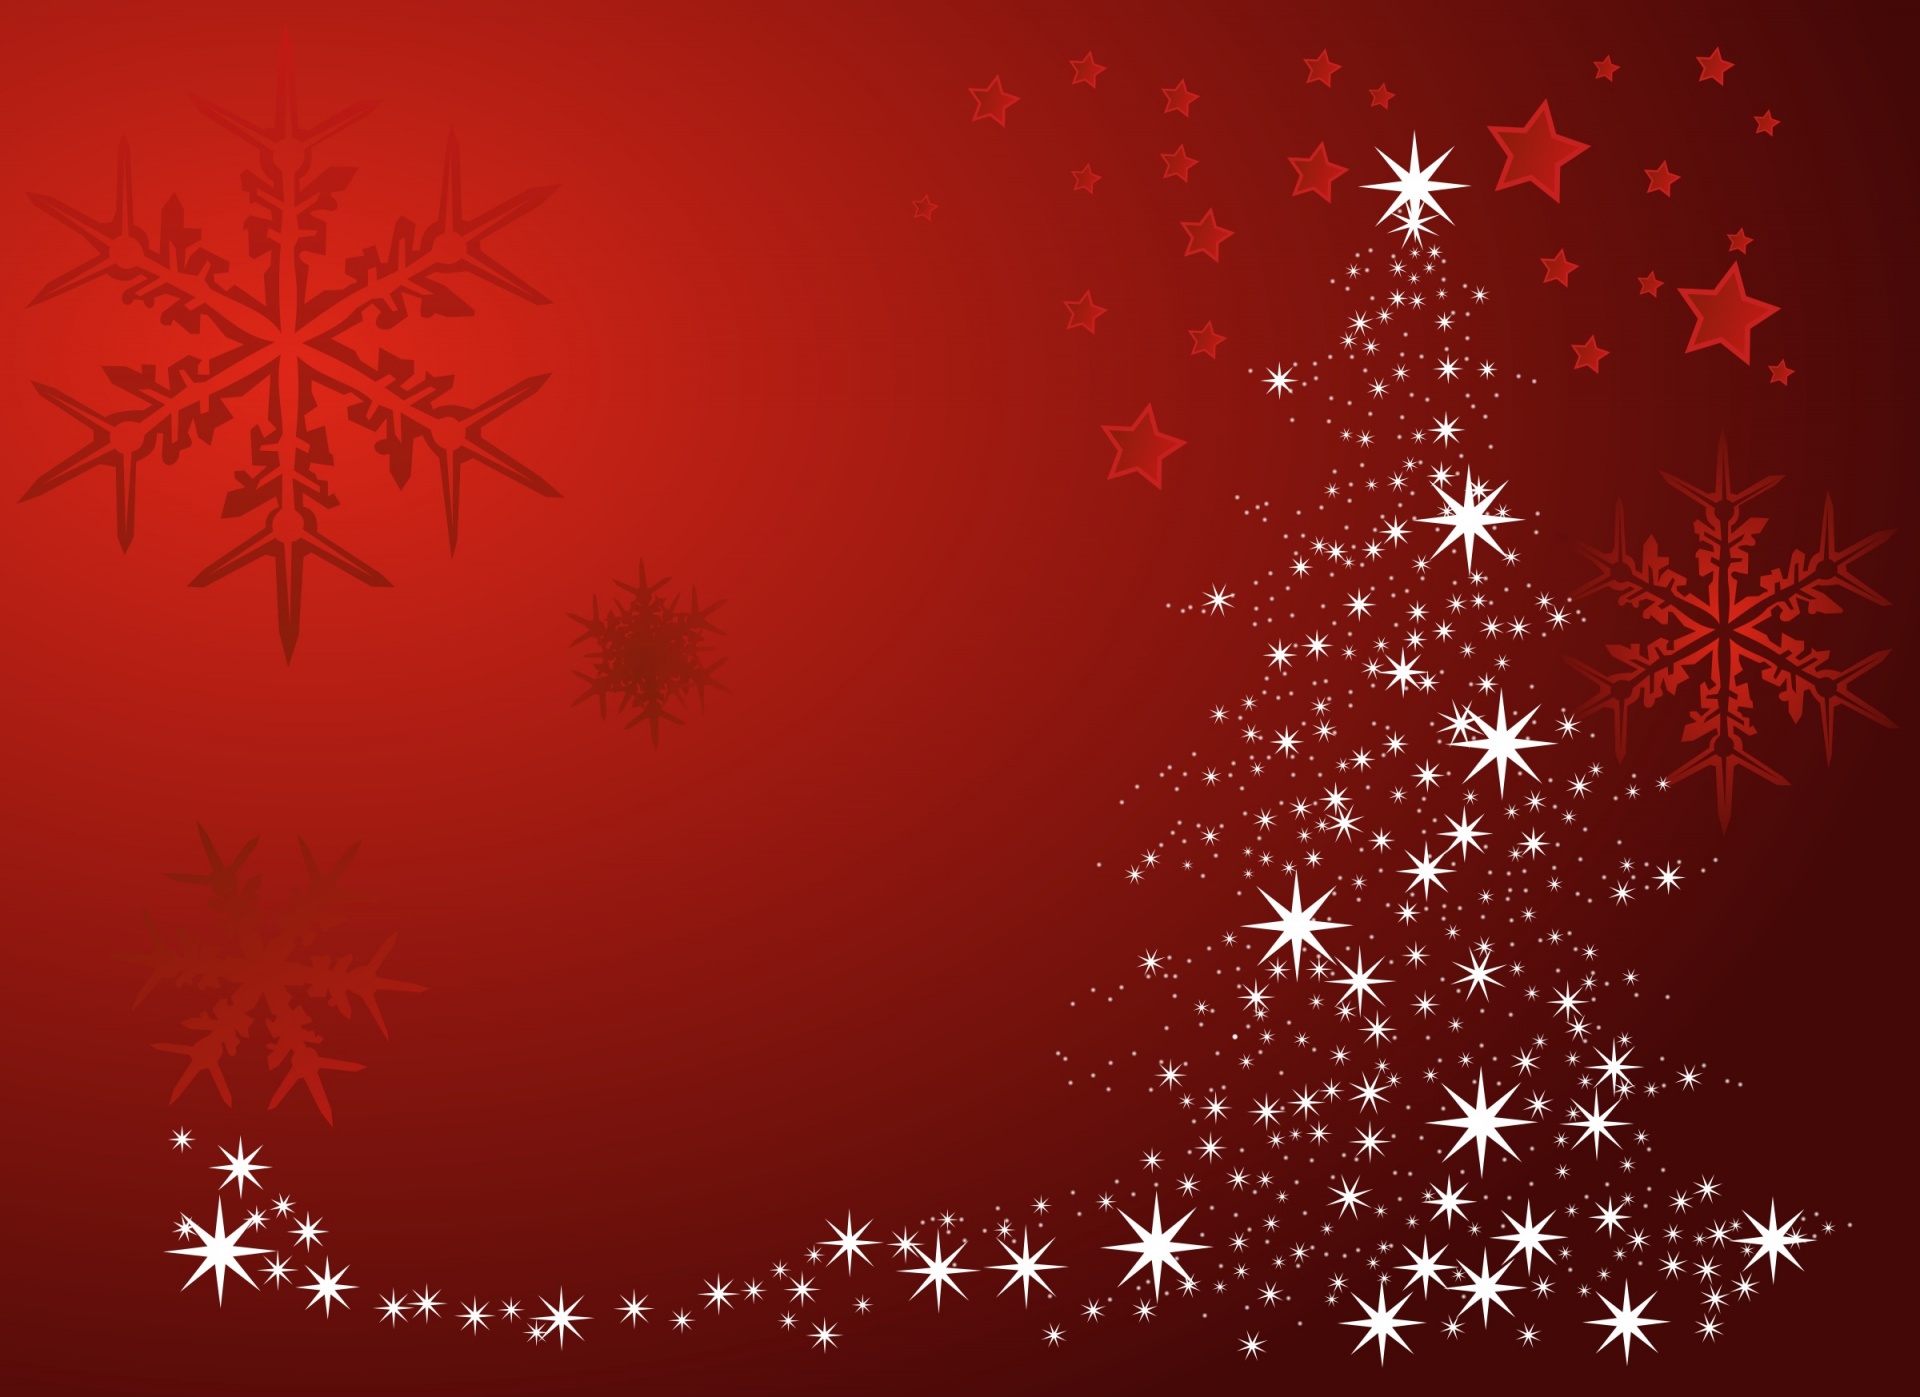 wonderful red background holiday images background